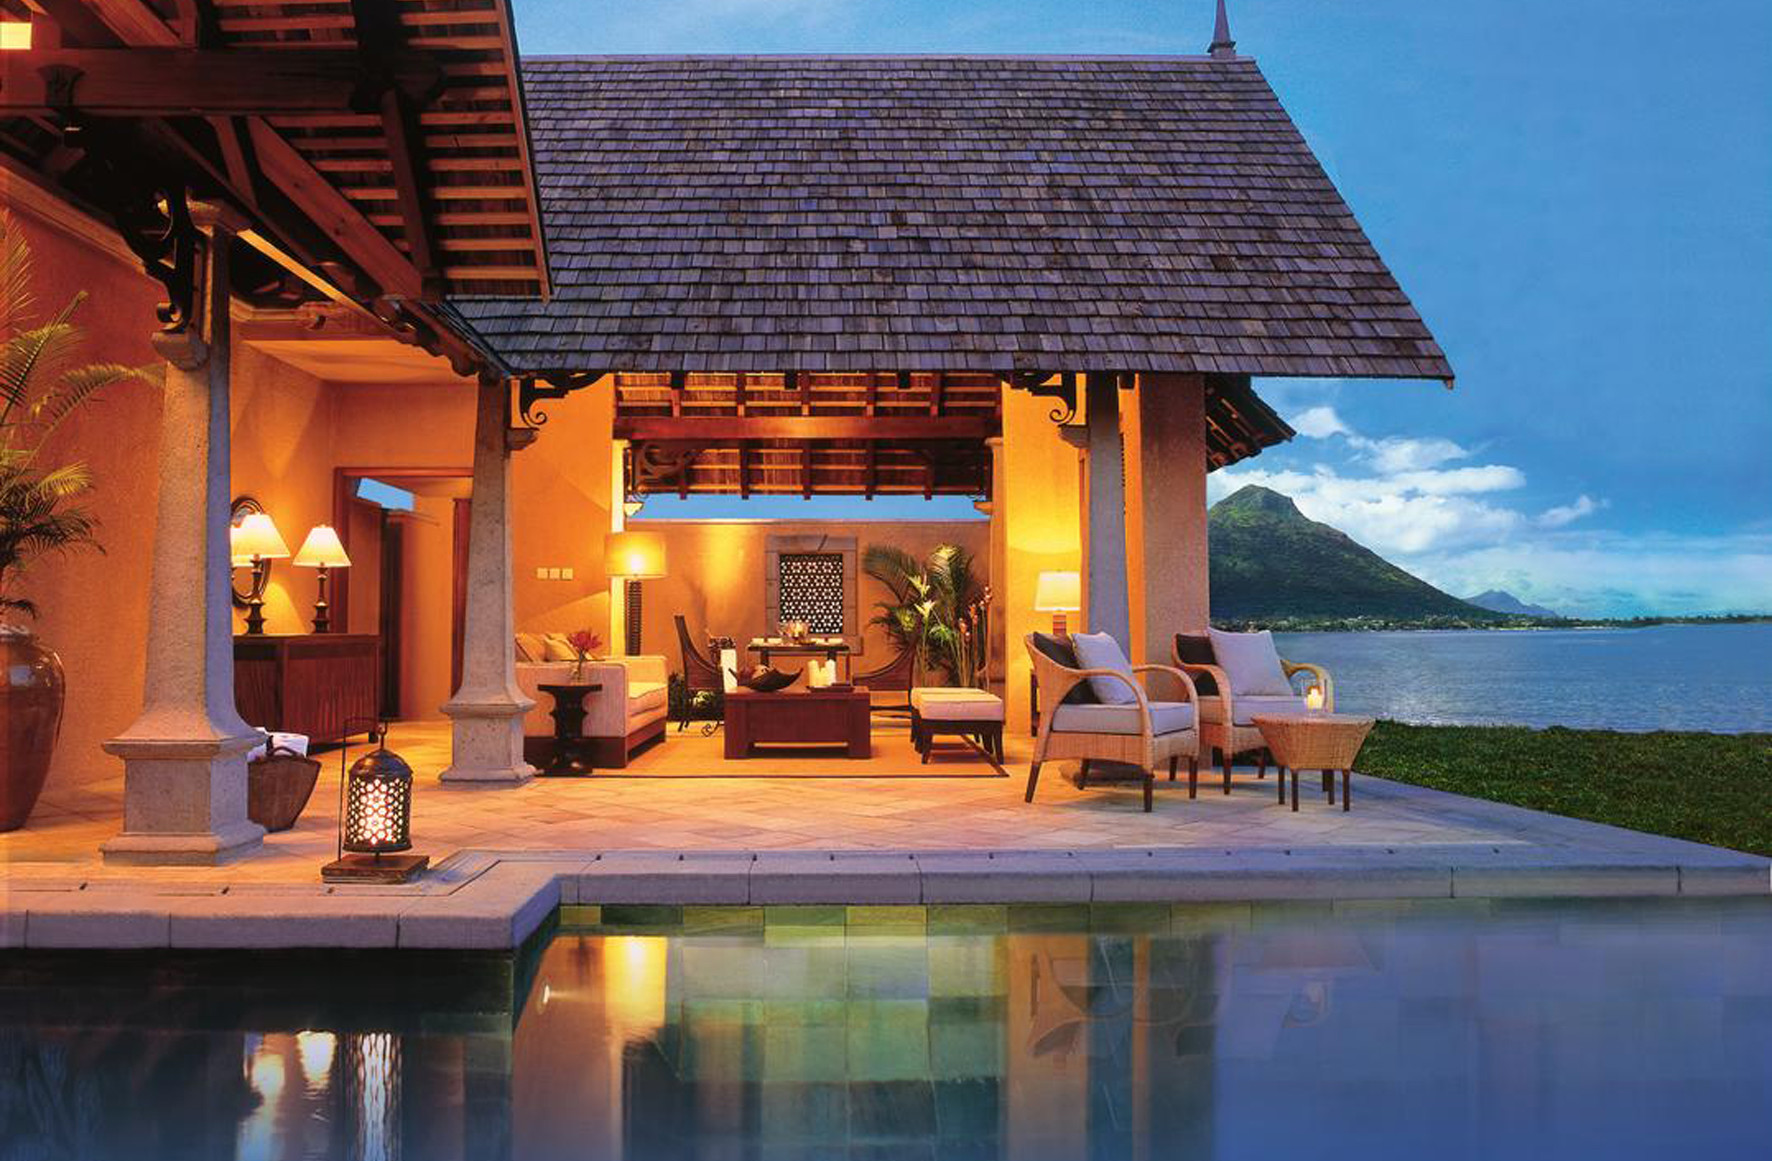 news-main-nouvel-hotel-membre-maradiva-villas-resort-spa-mauritius.1577700657.jpg